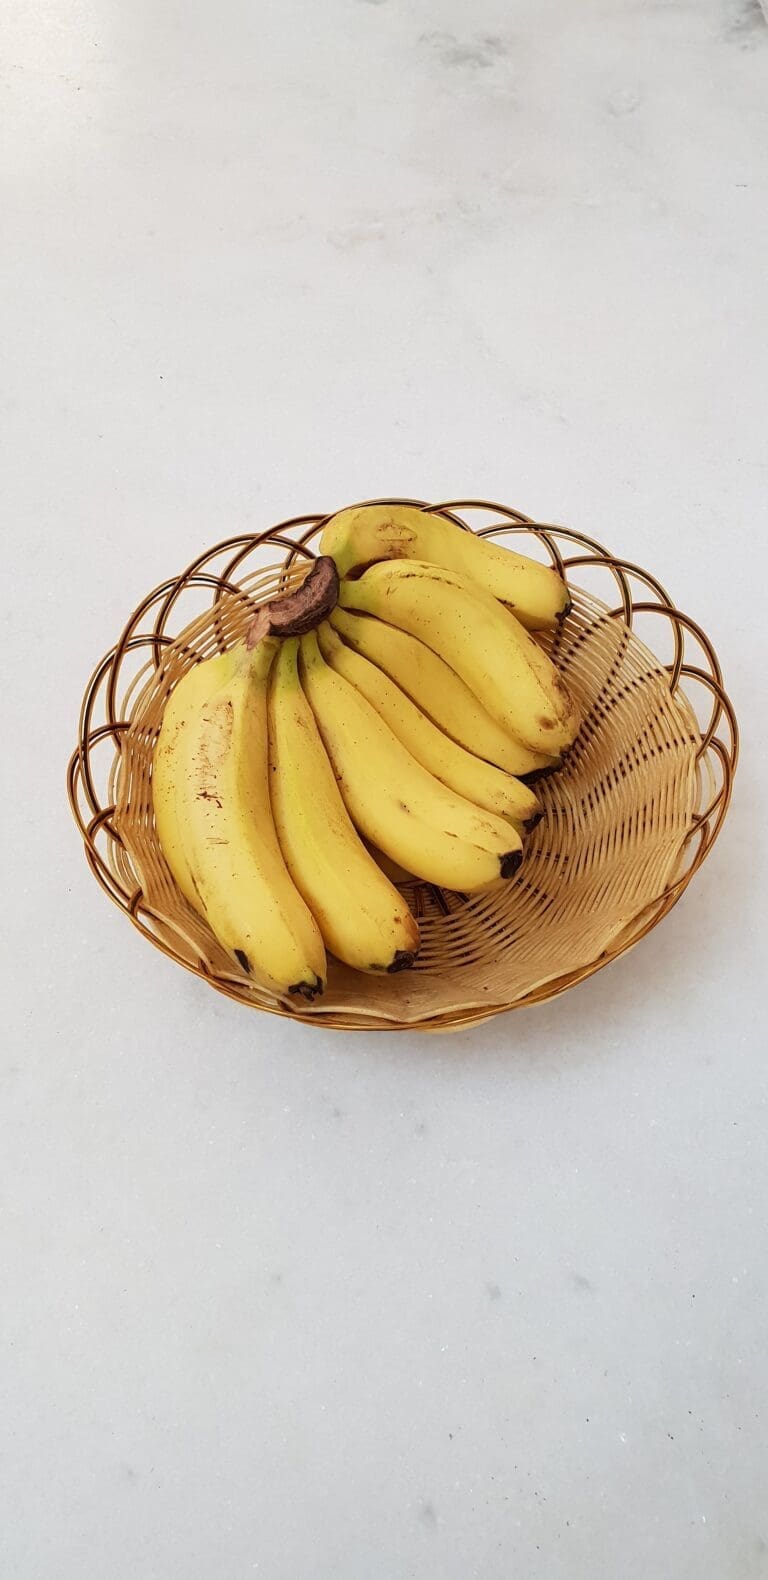 Fastest Way to Ripen A Banana